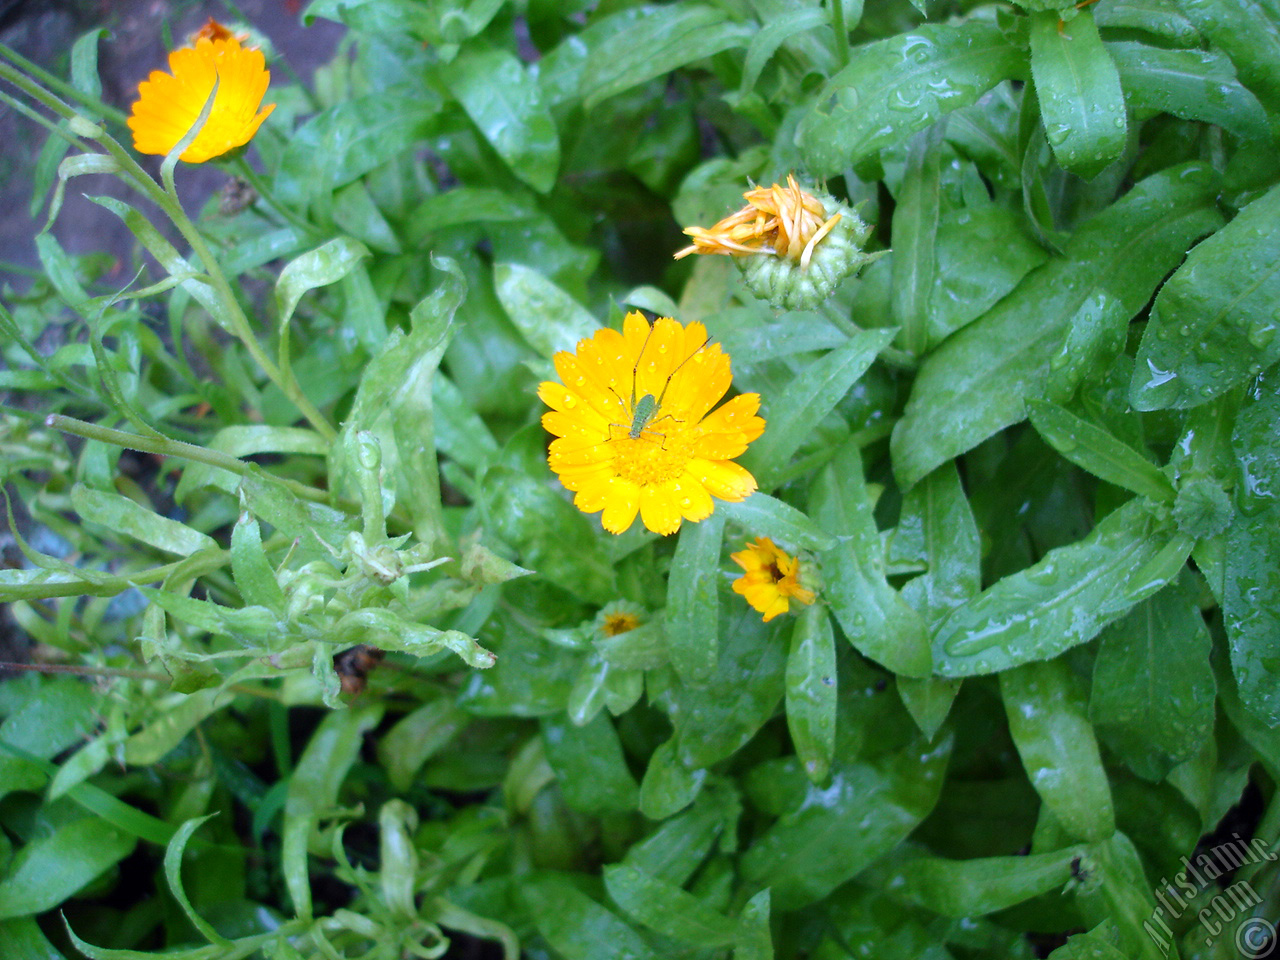 Dark orange color Pot Marigold -Scotch Marigold- flower which is similar to yellow daisy.
